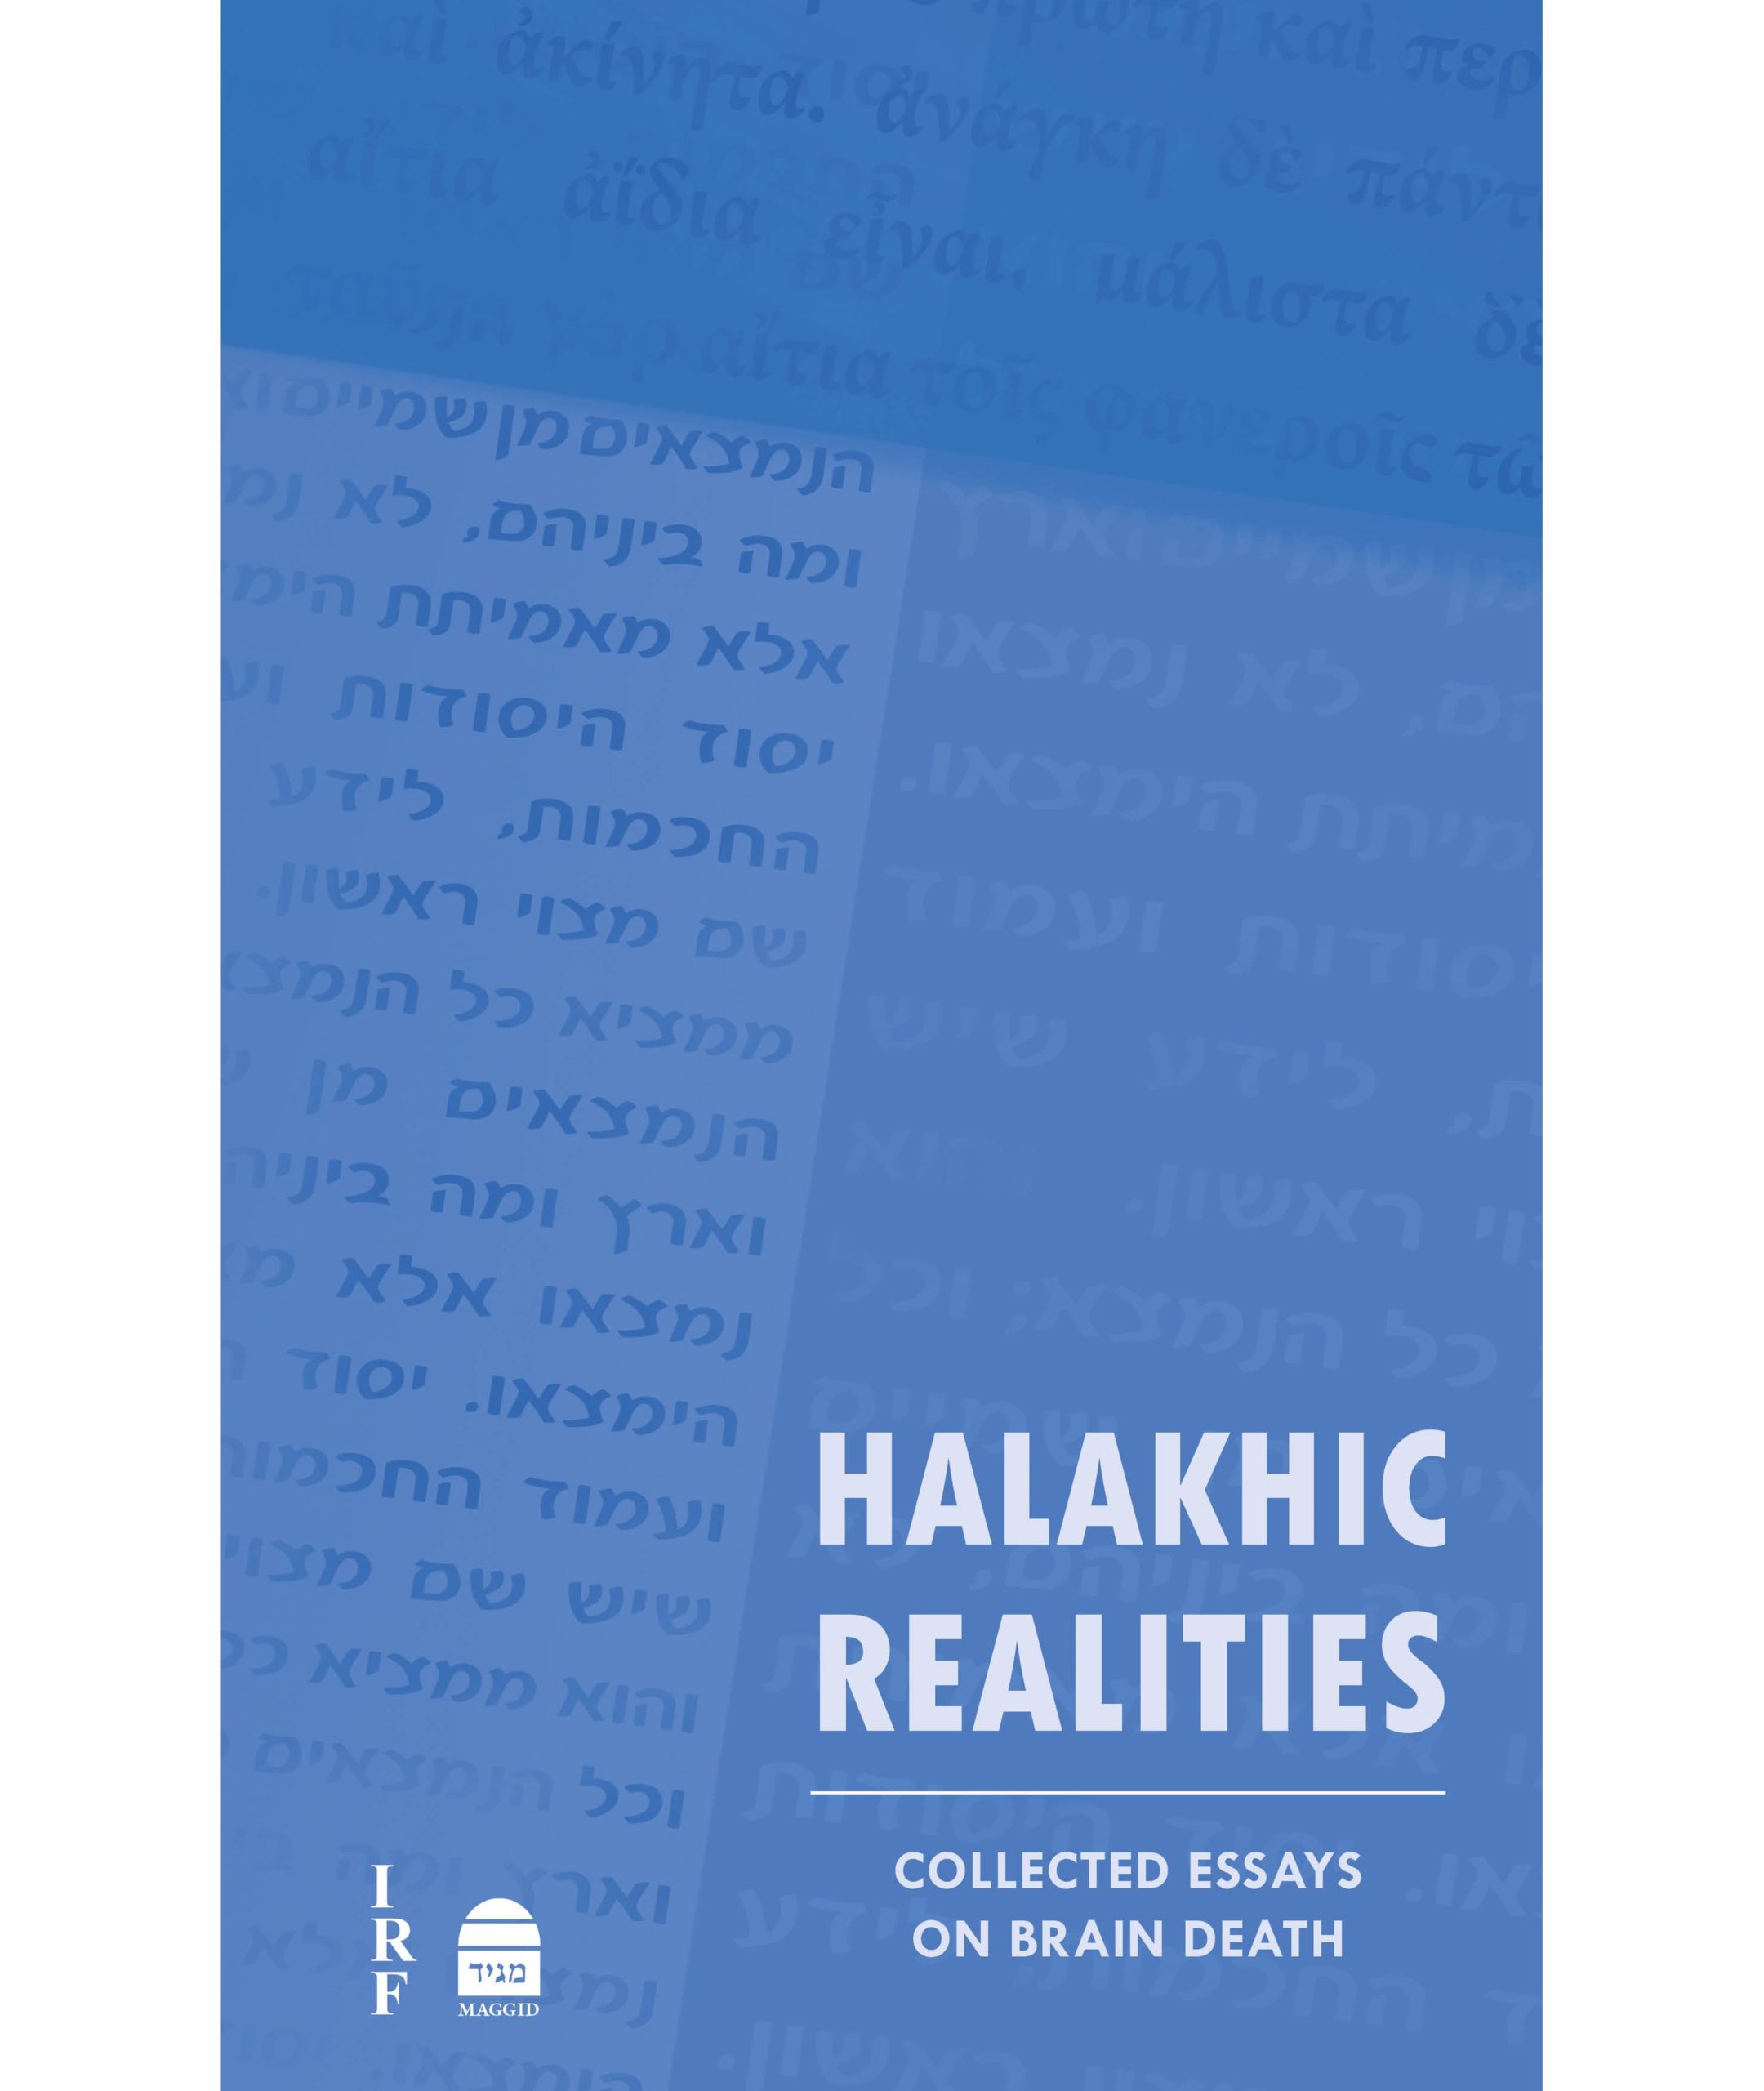 Irf Series Halakhic Realities Brain Death For Website 1 Scaled 1.jpg